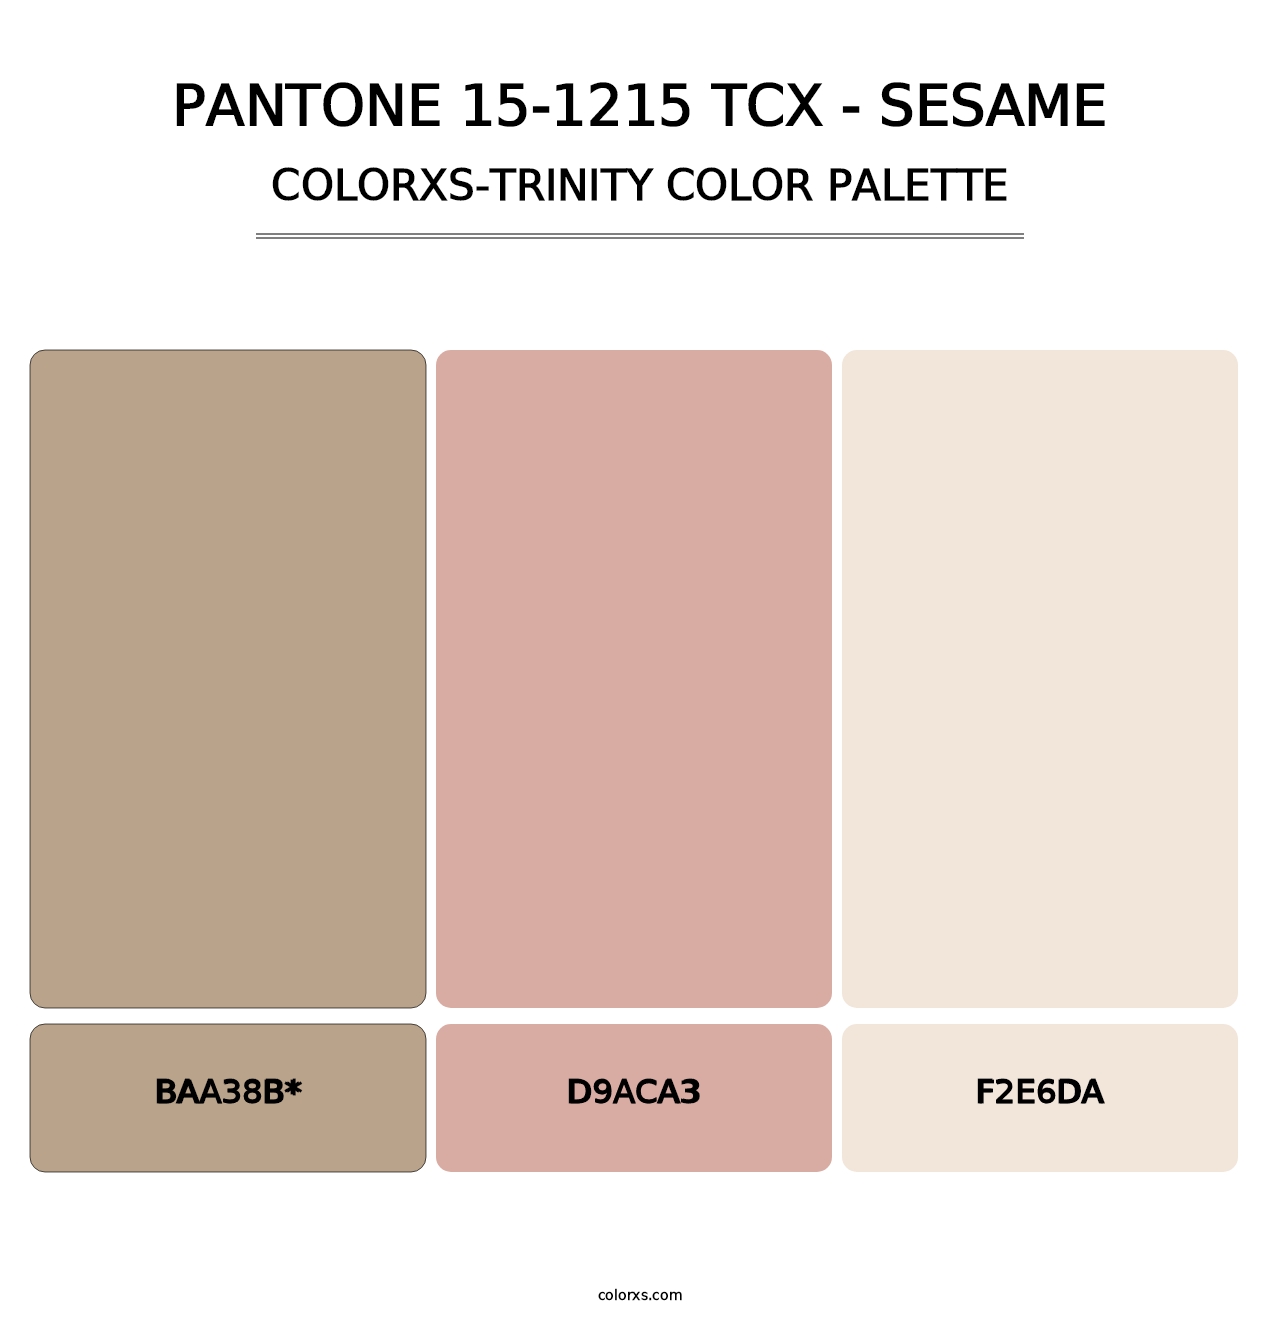 PANTONE 15-1215 TCX - Sesame - Colorxs Trinity Palette